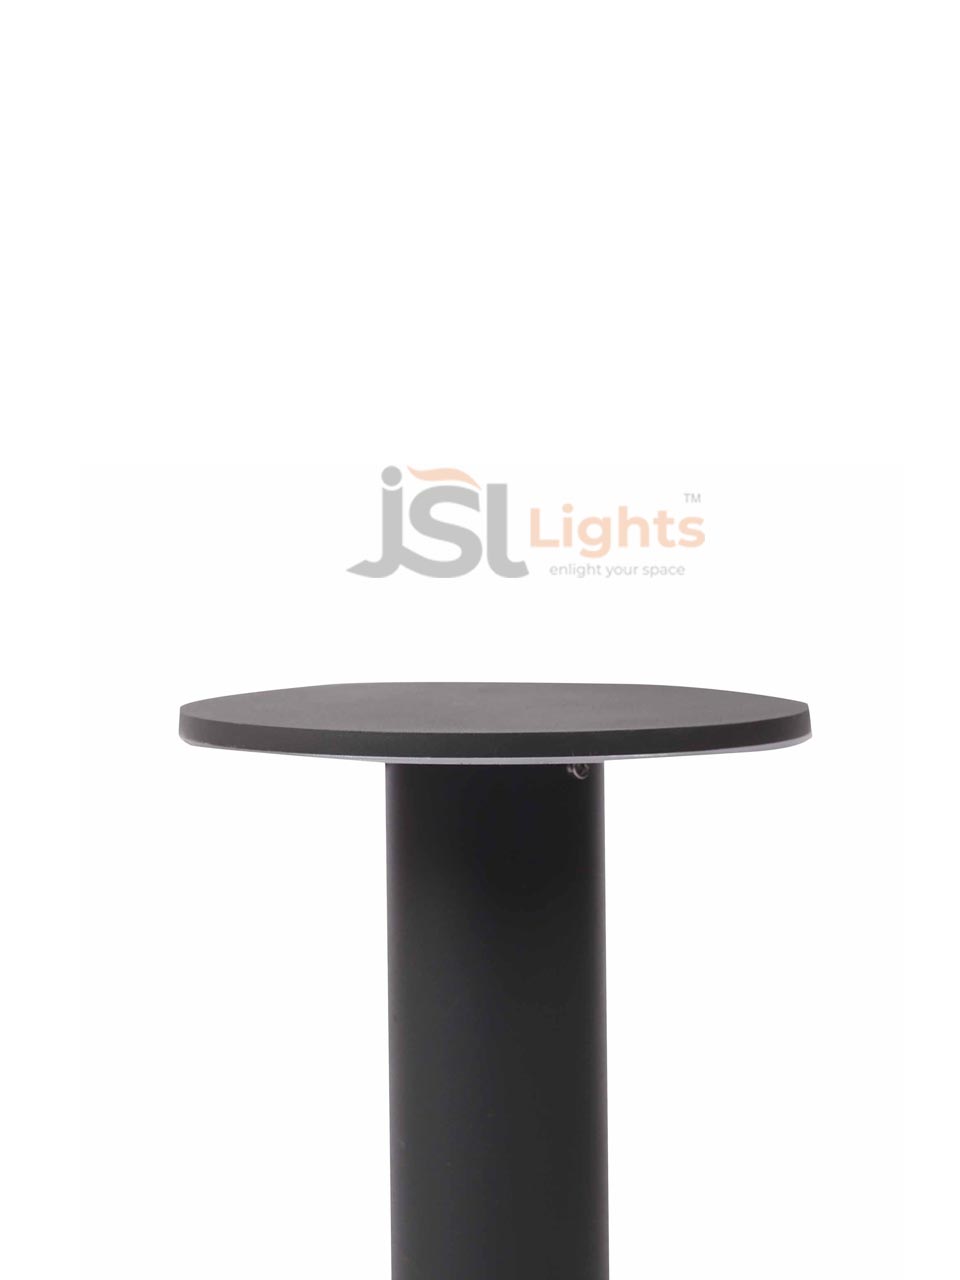 10in-round-outdoor-grey-led-gate-light-7080-pillar-post-light-aluminium-body-with-inbuilt-12w-led-ip65-gate-lamp